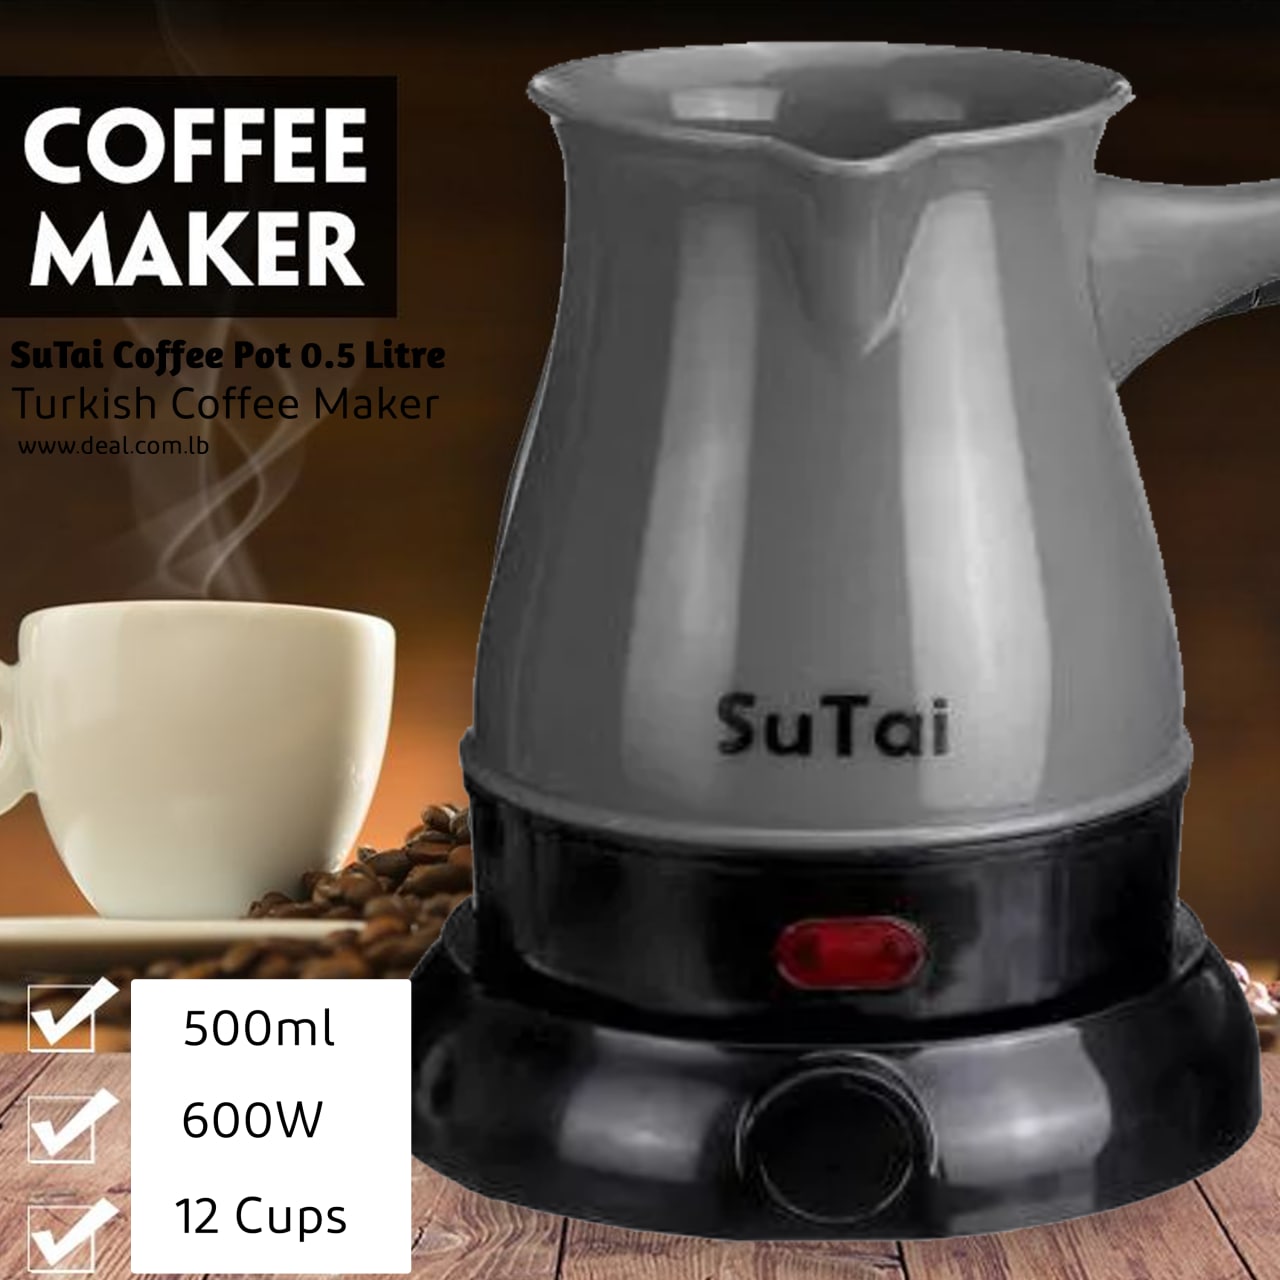 SuTai Coffee Pot 0.5 Litre | Turkish Coffee Maker